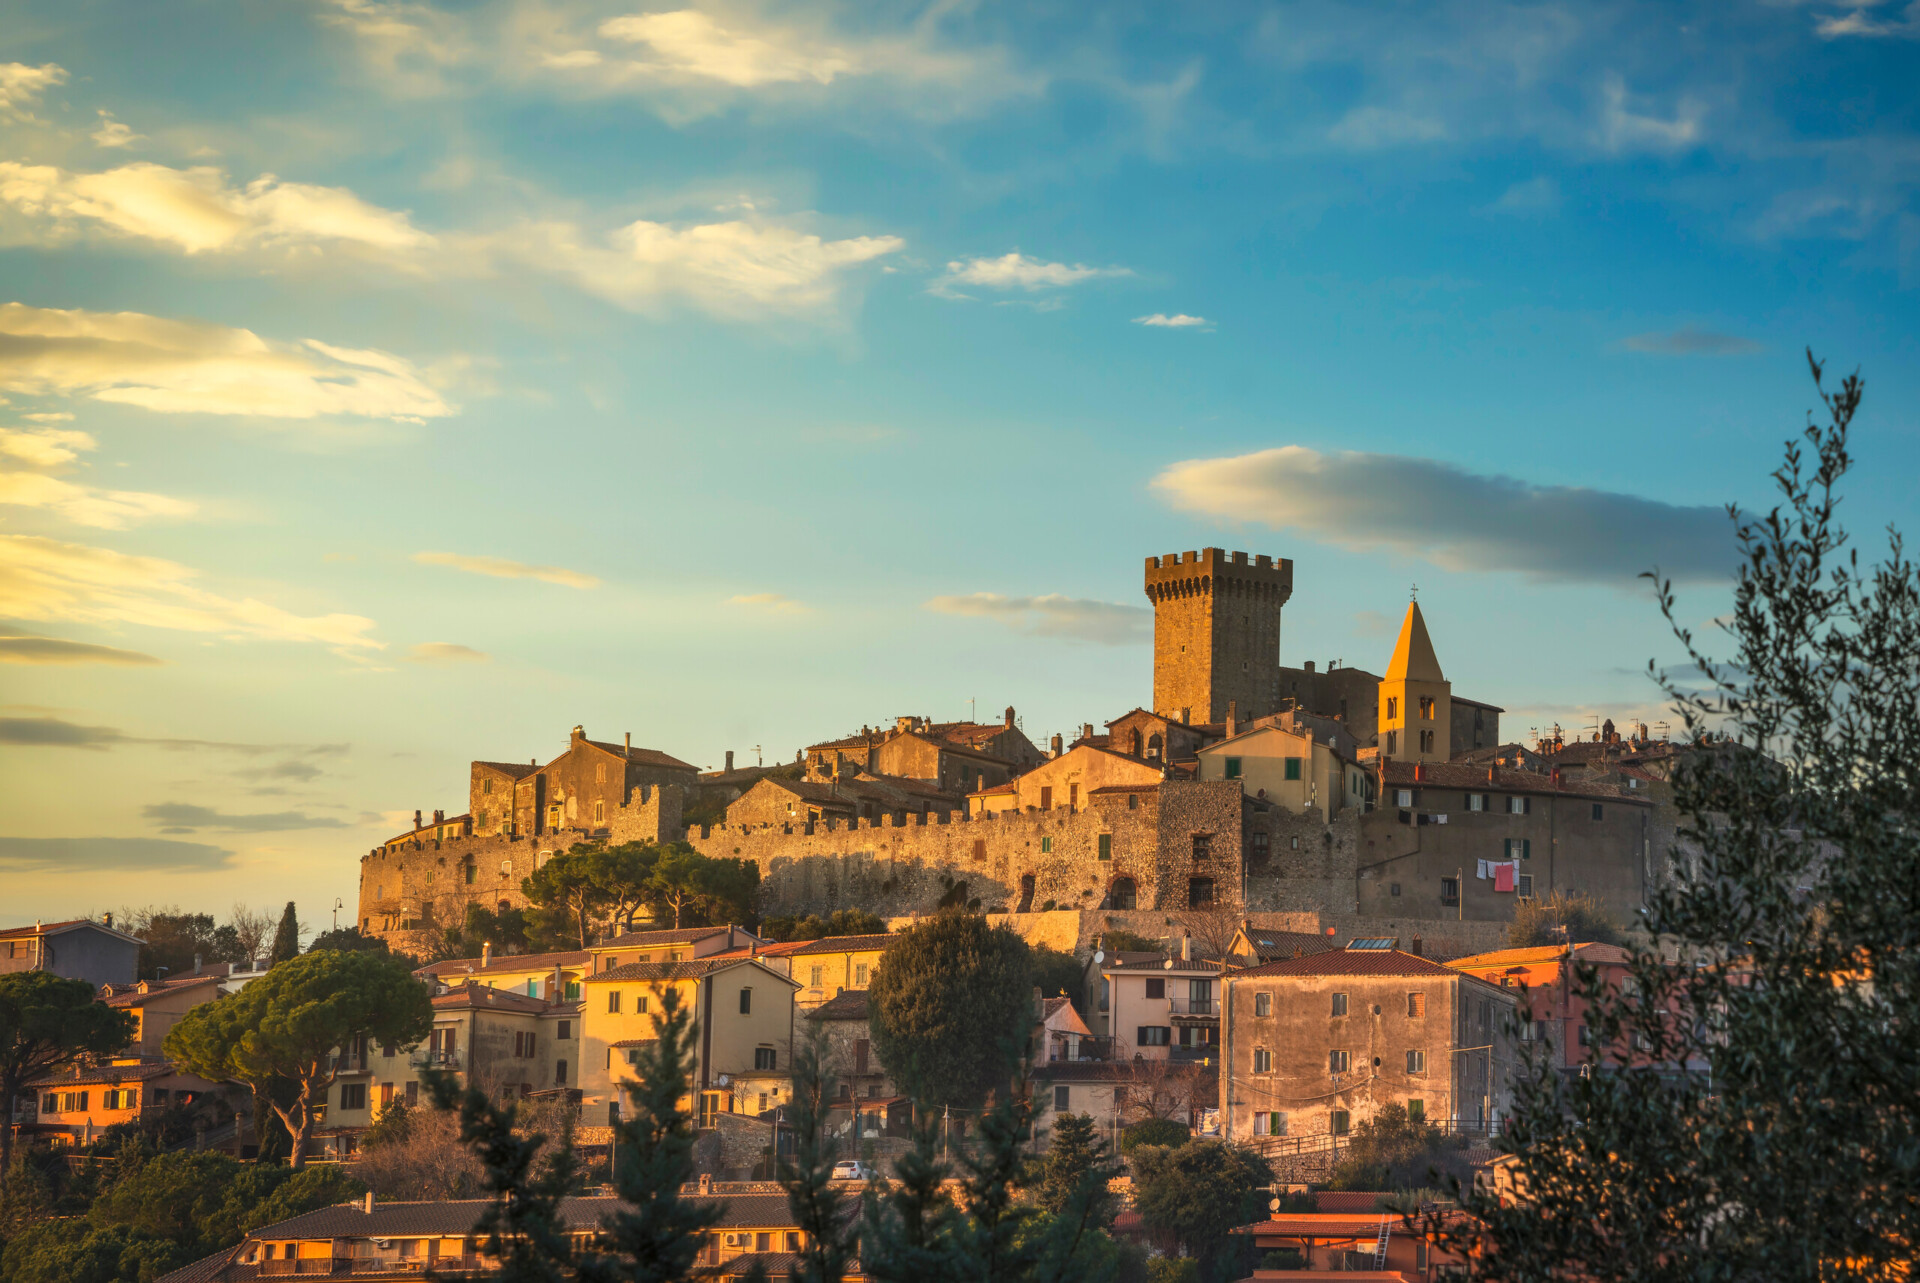 Capalbio medieval village skyline at sunset. Maremma Tuscany Italy Europe